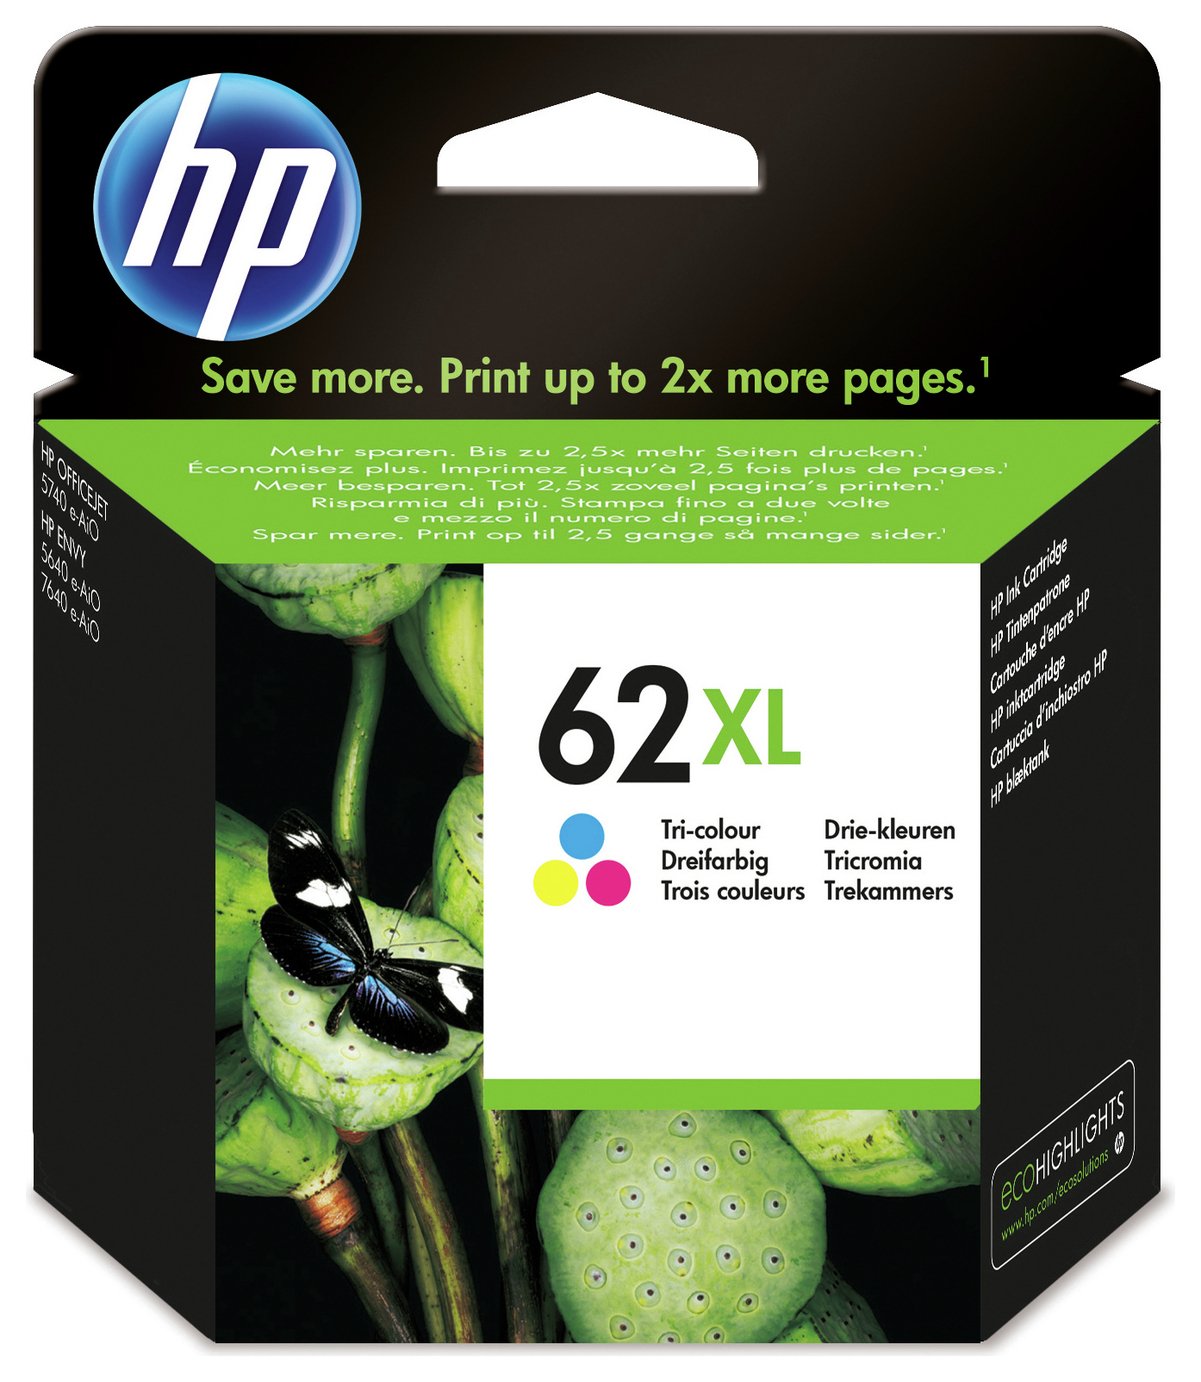 HP 62 XL High Yield Original Ink Cartridge Review